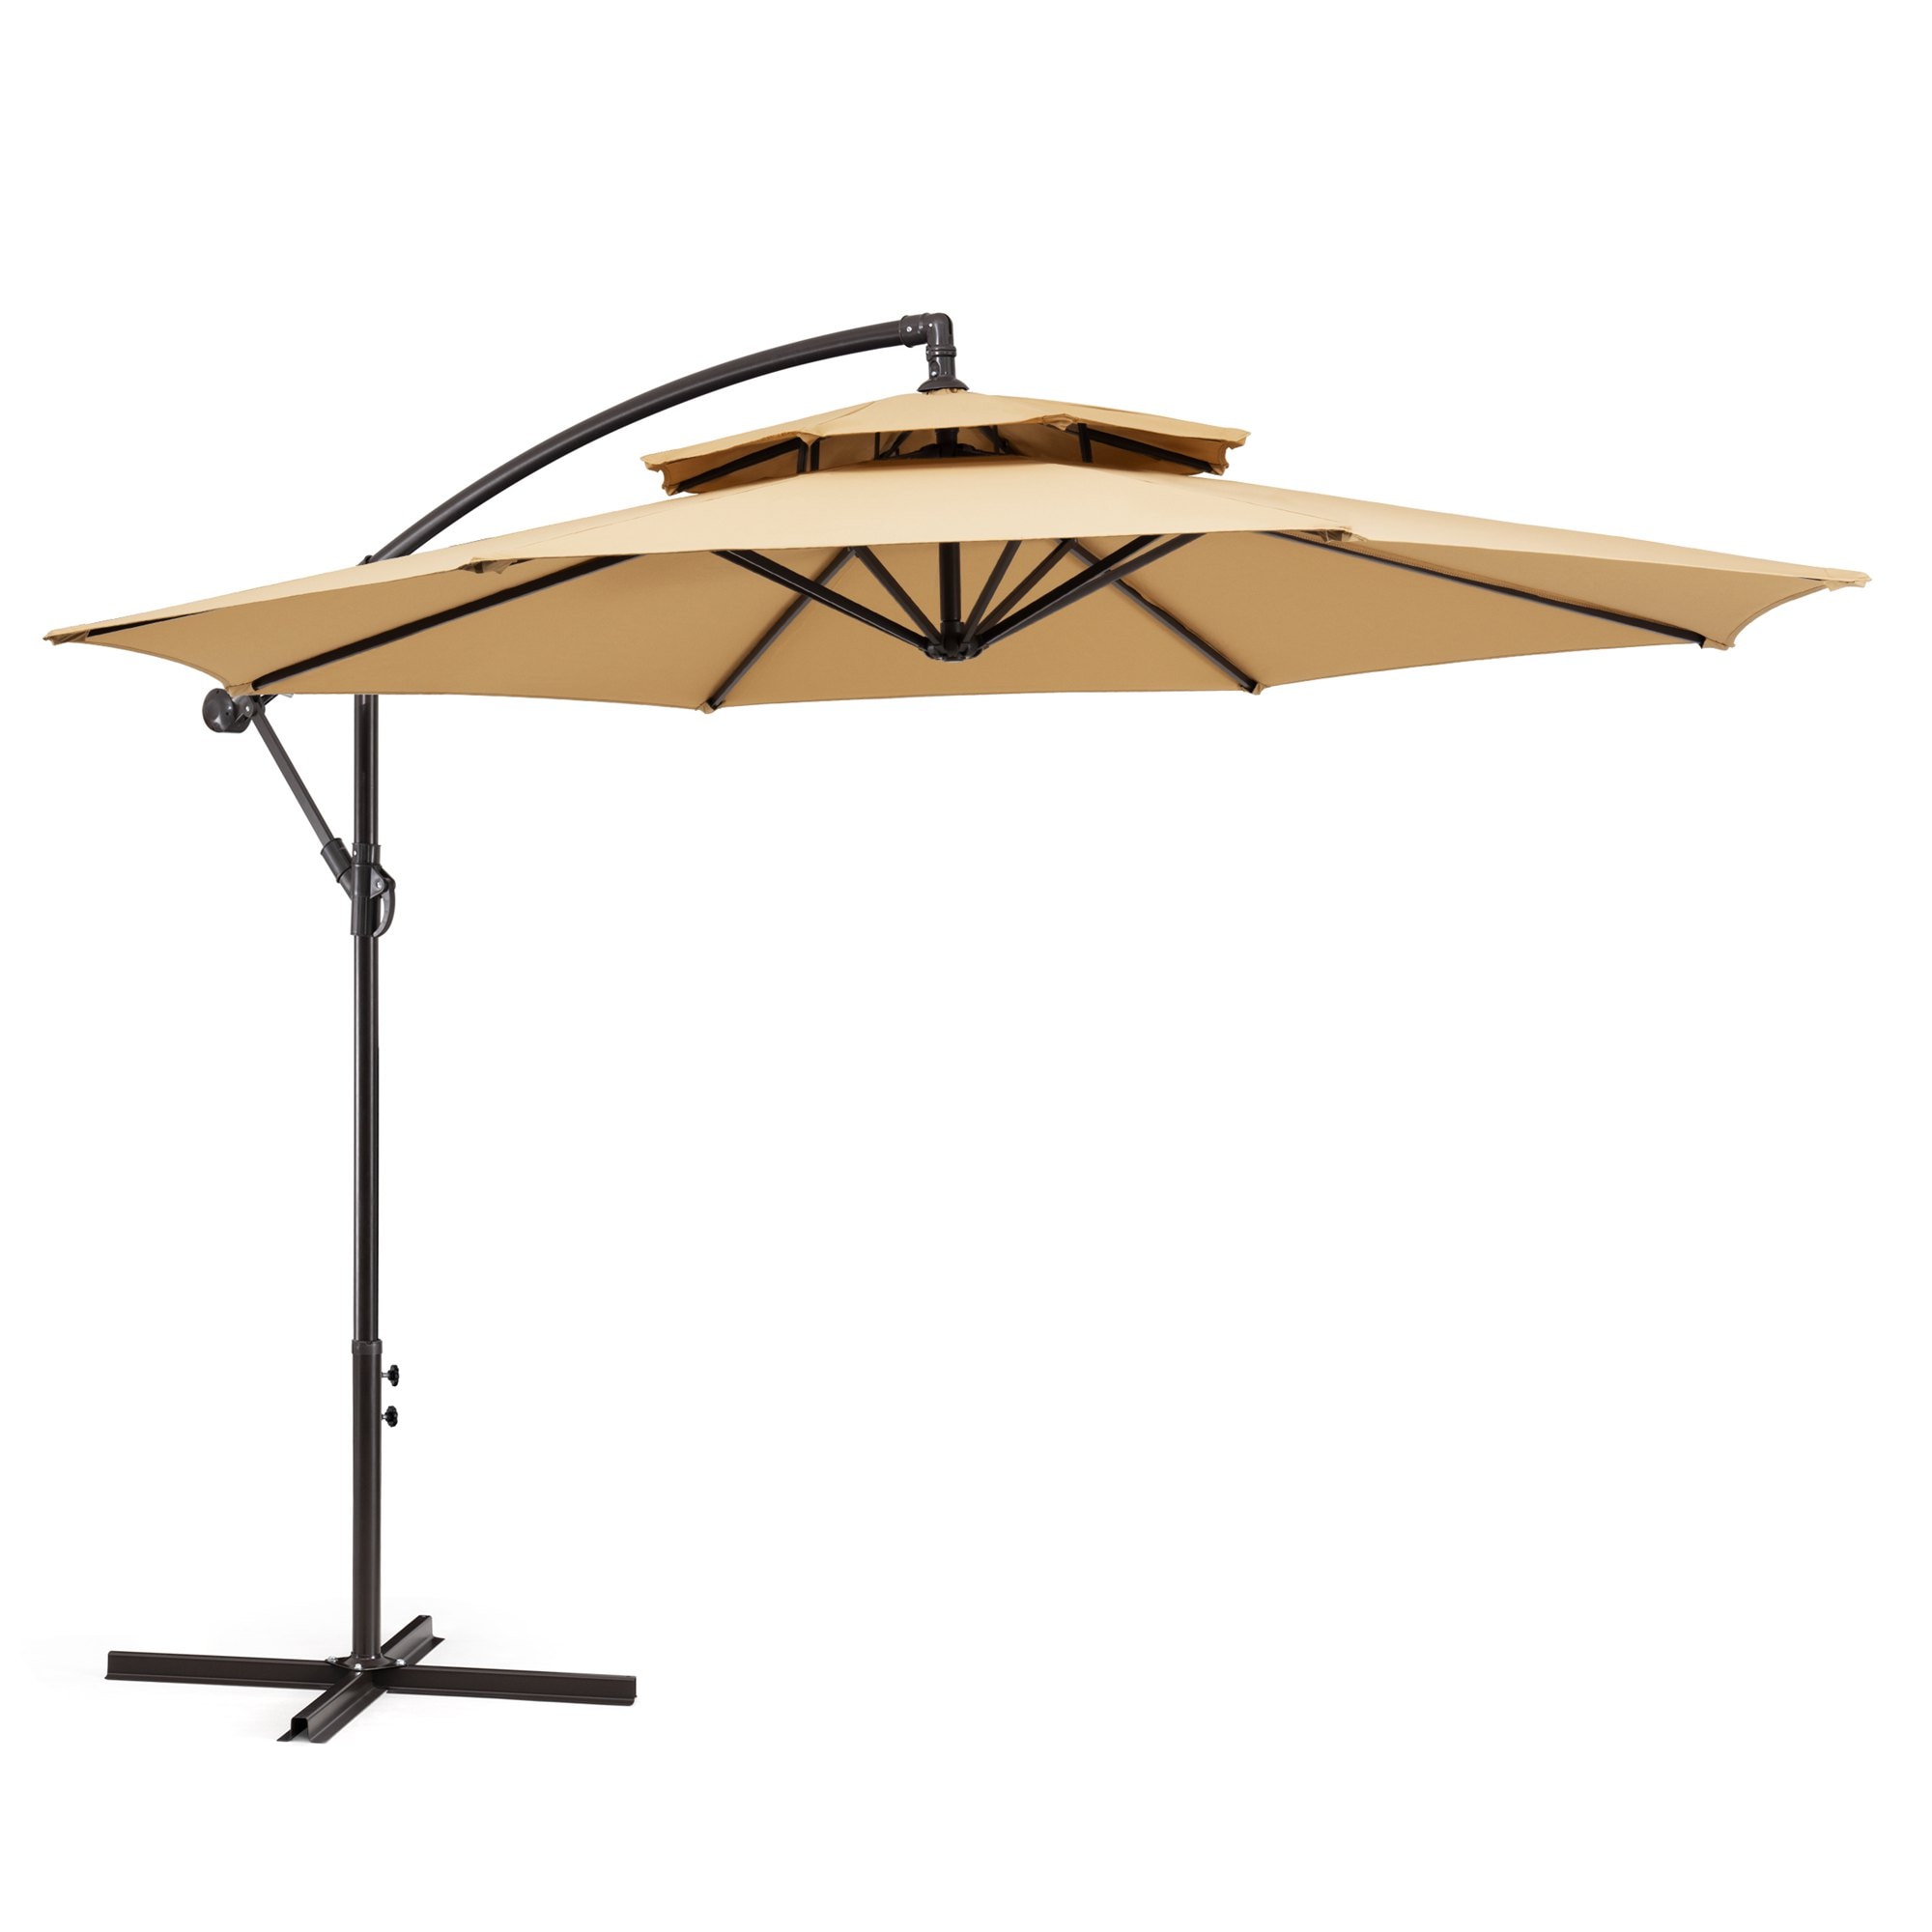 Details about   10 FT Patio Hanging Umbrella Offset Cantilever Rotation Outdoor Tilt Shade Beige 